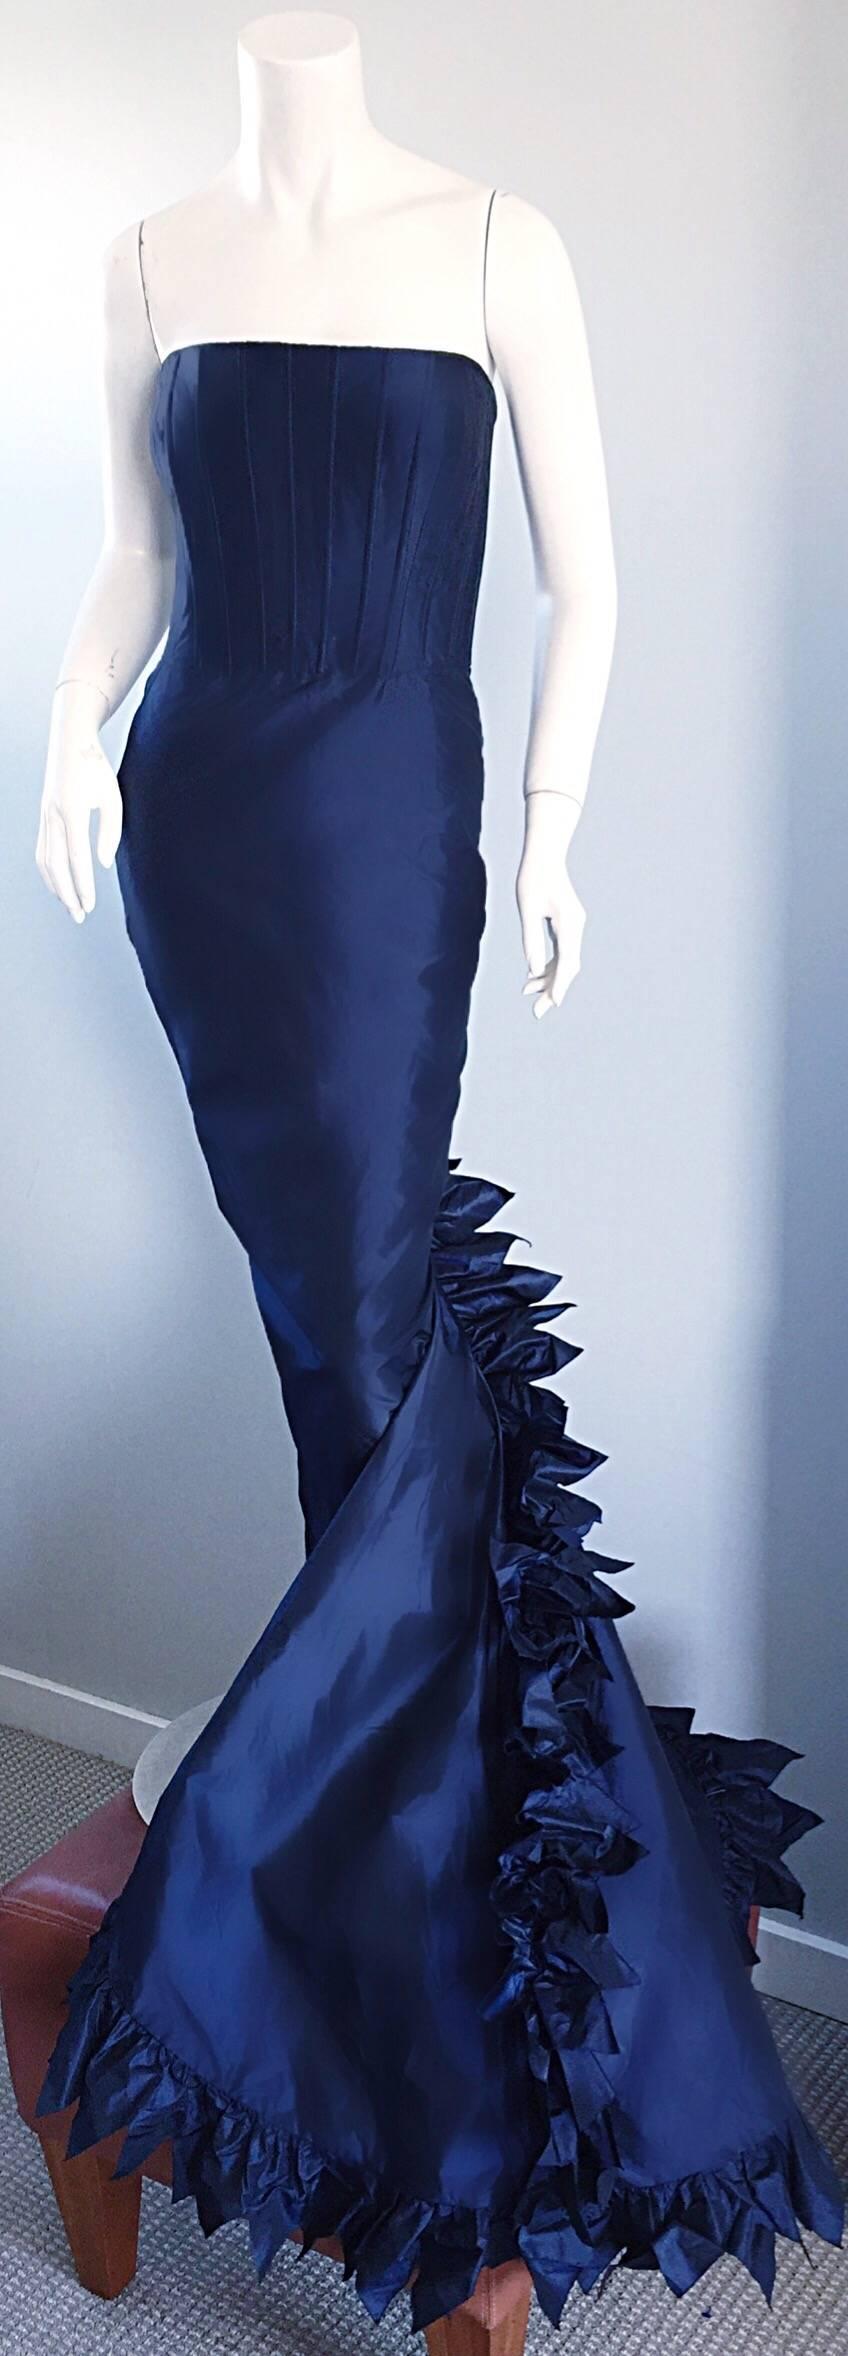 Exquisite Vintage Oscar de la Renta Navy Blue Silk Taffeta Dramatic Size 6 Gown 4